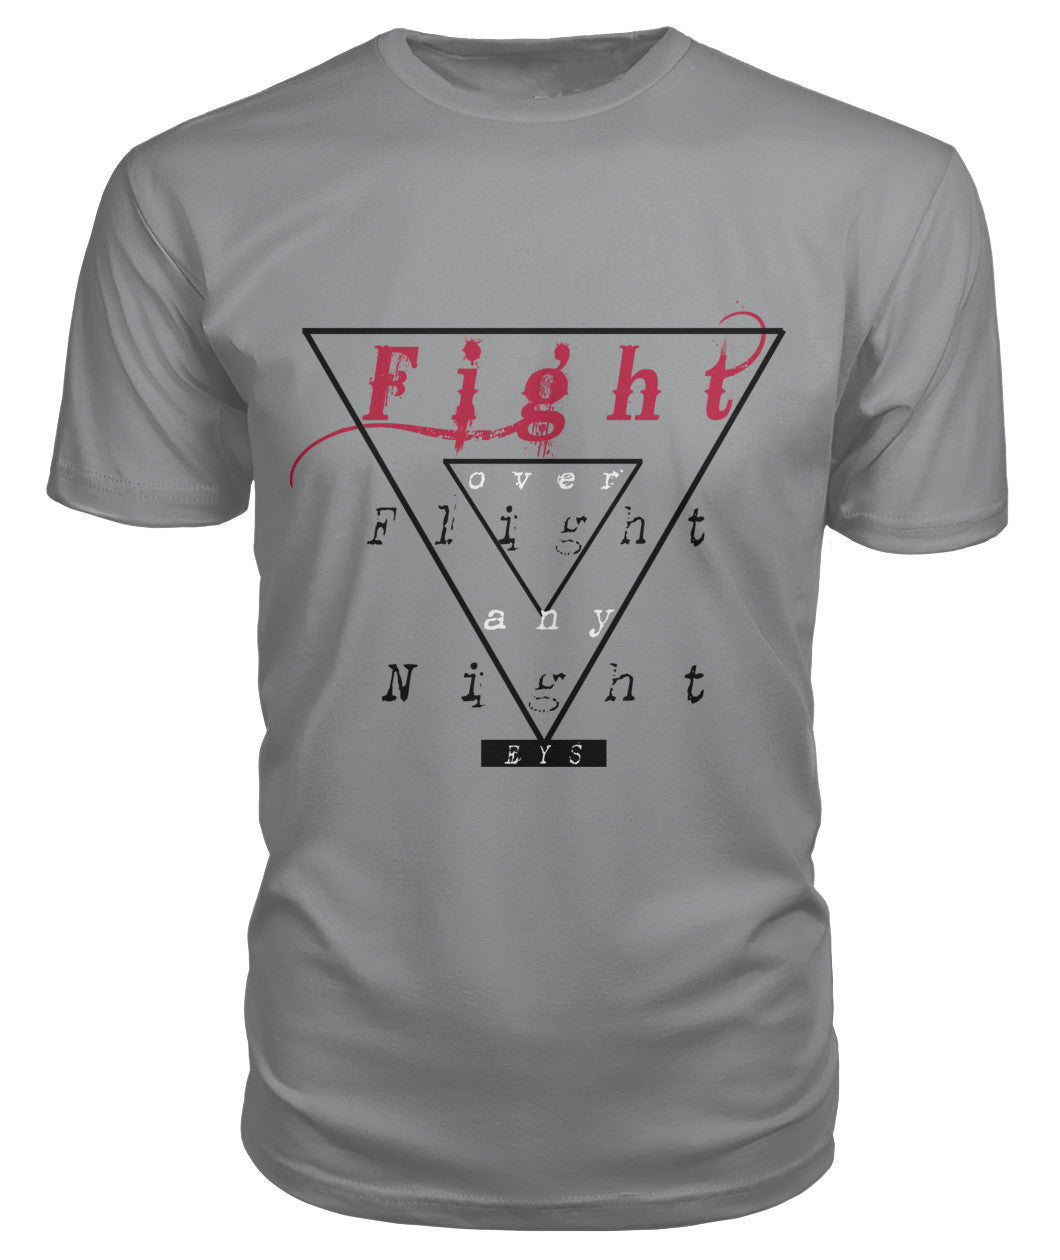 Fight over flight any night (T-Shirts)